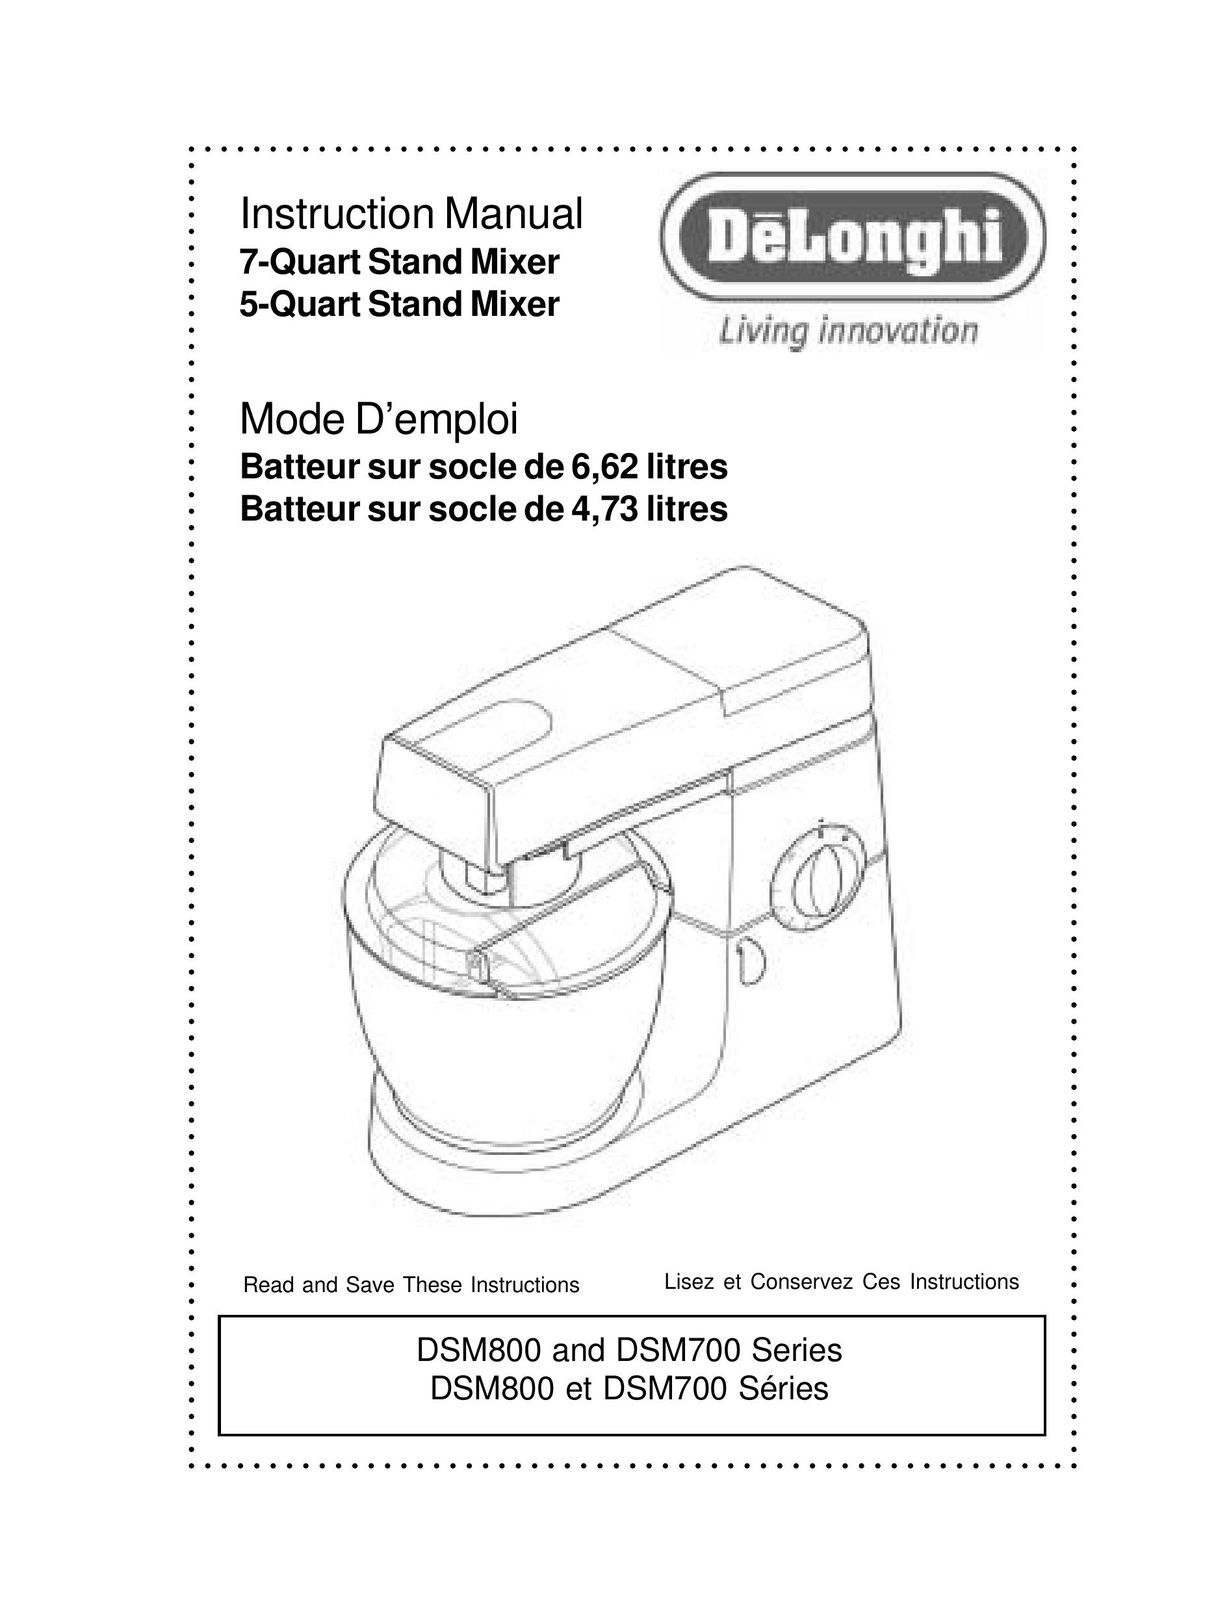 DeLonghi DSM800 Series, DSM700 Series Blender User Manual